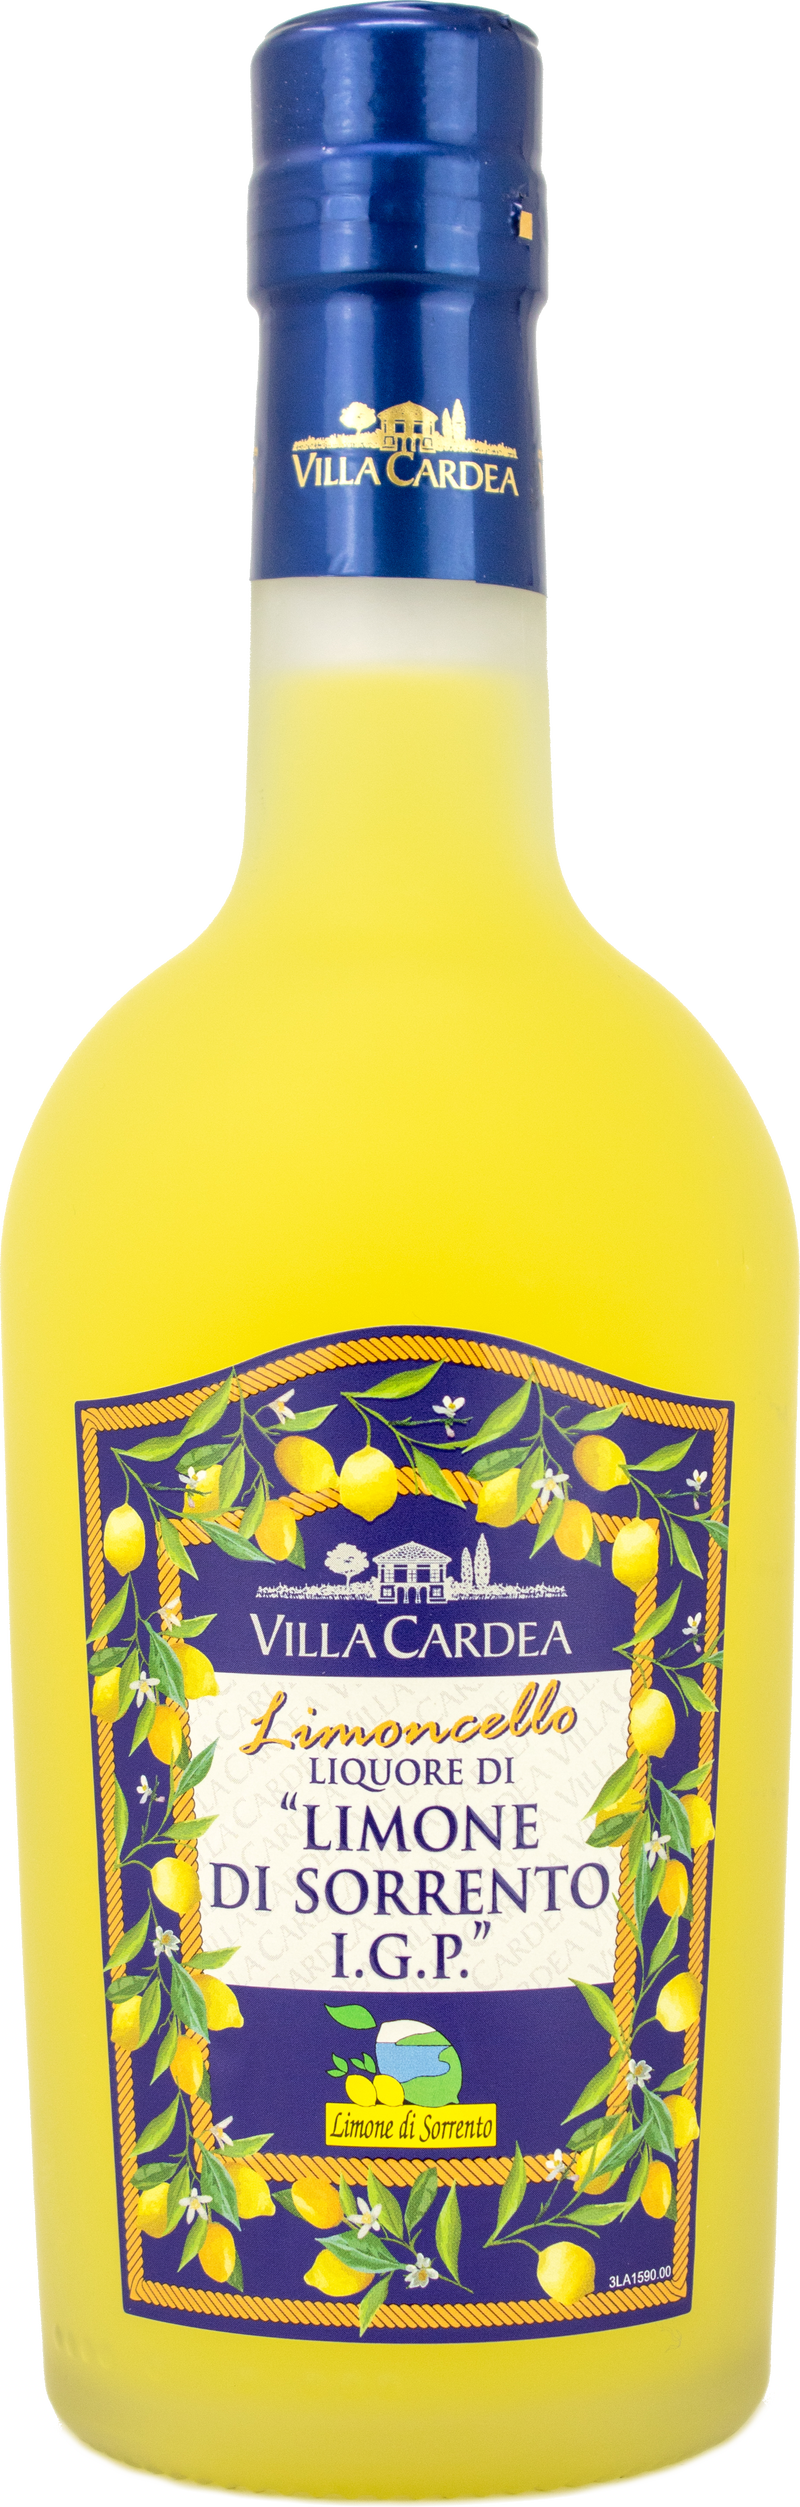 Villa Cardea Limone Di 700ml I.G.P. Sorrento - Limoncello BottleBuys